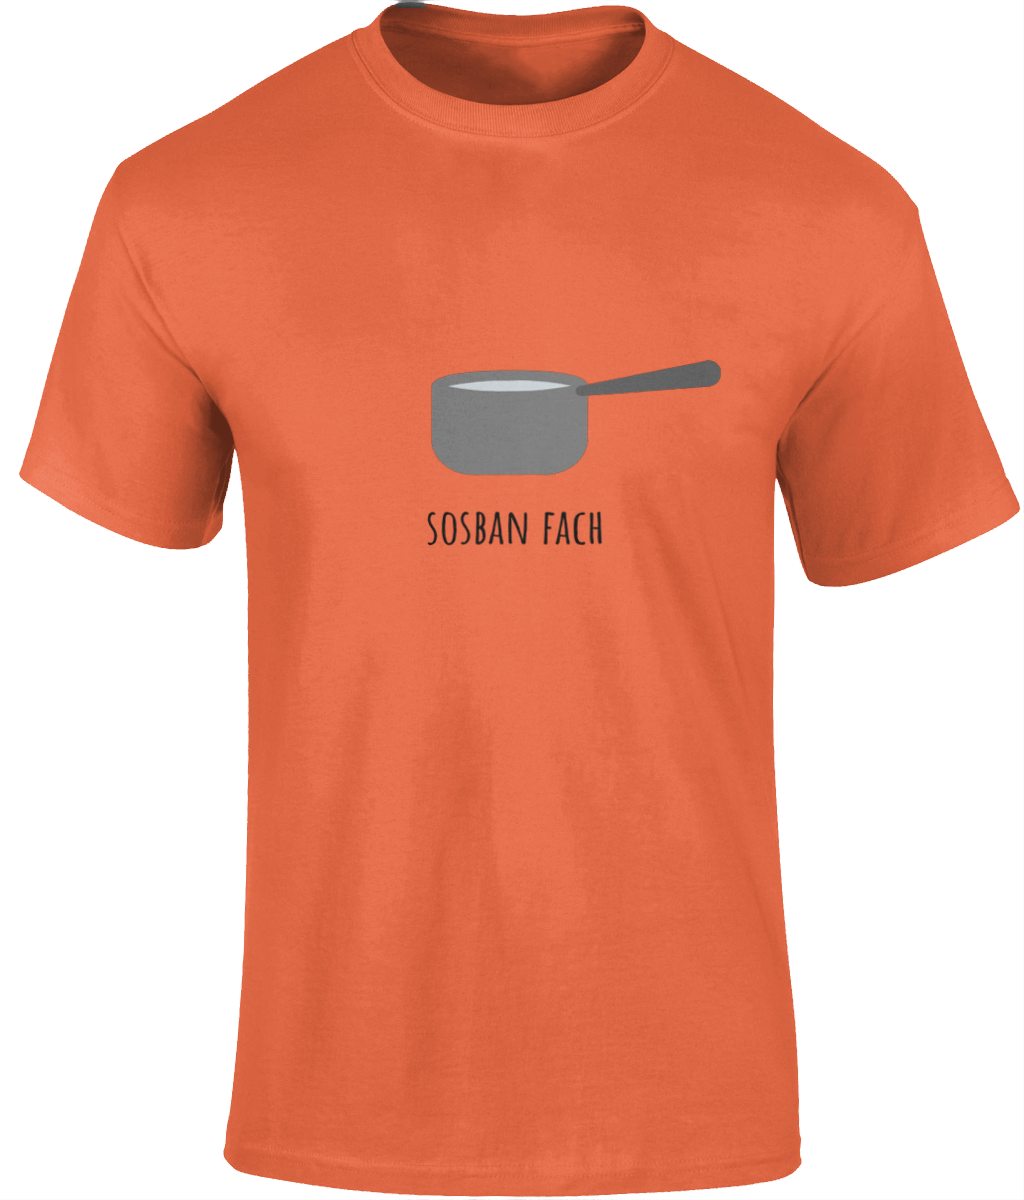 Sosban Fach T-Shirt | Welsh Adult Clothing